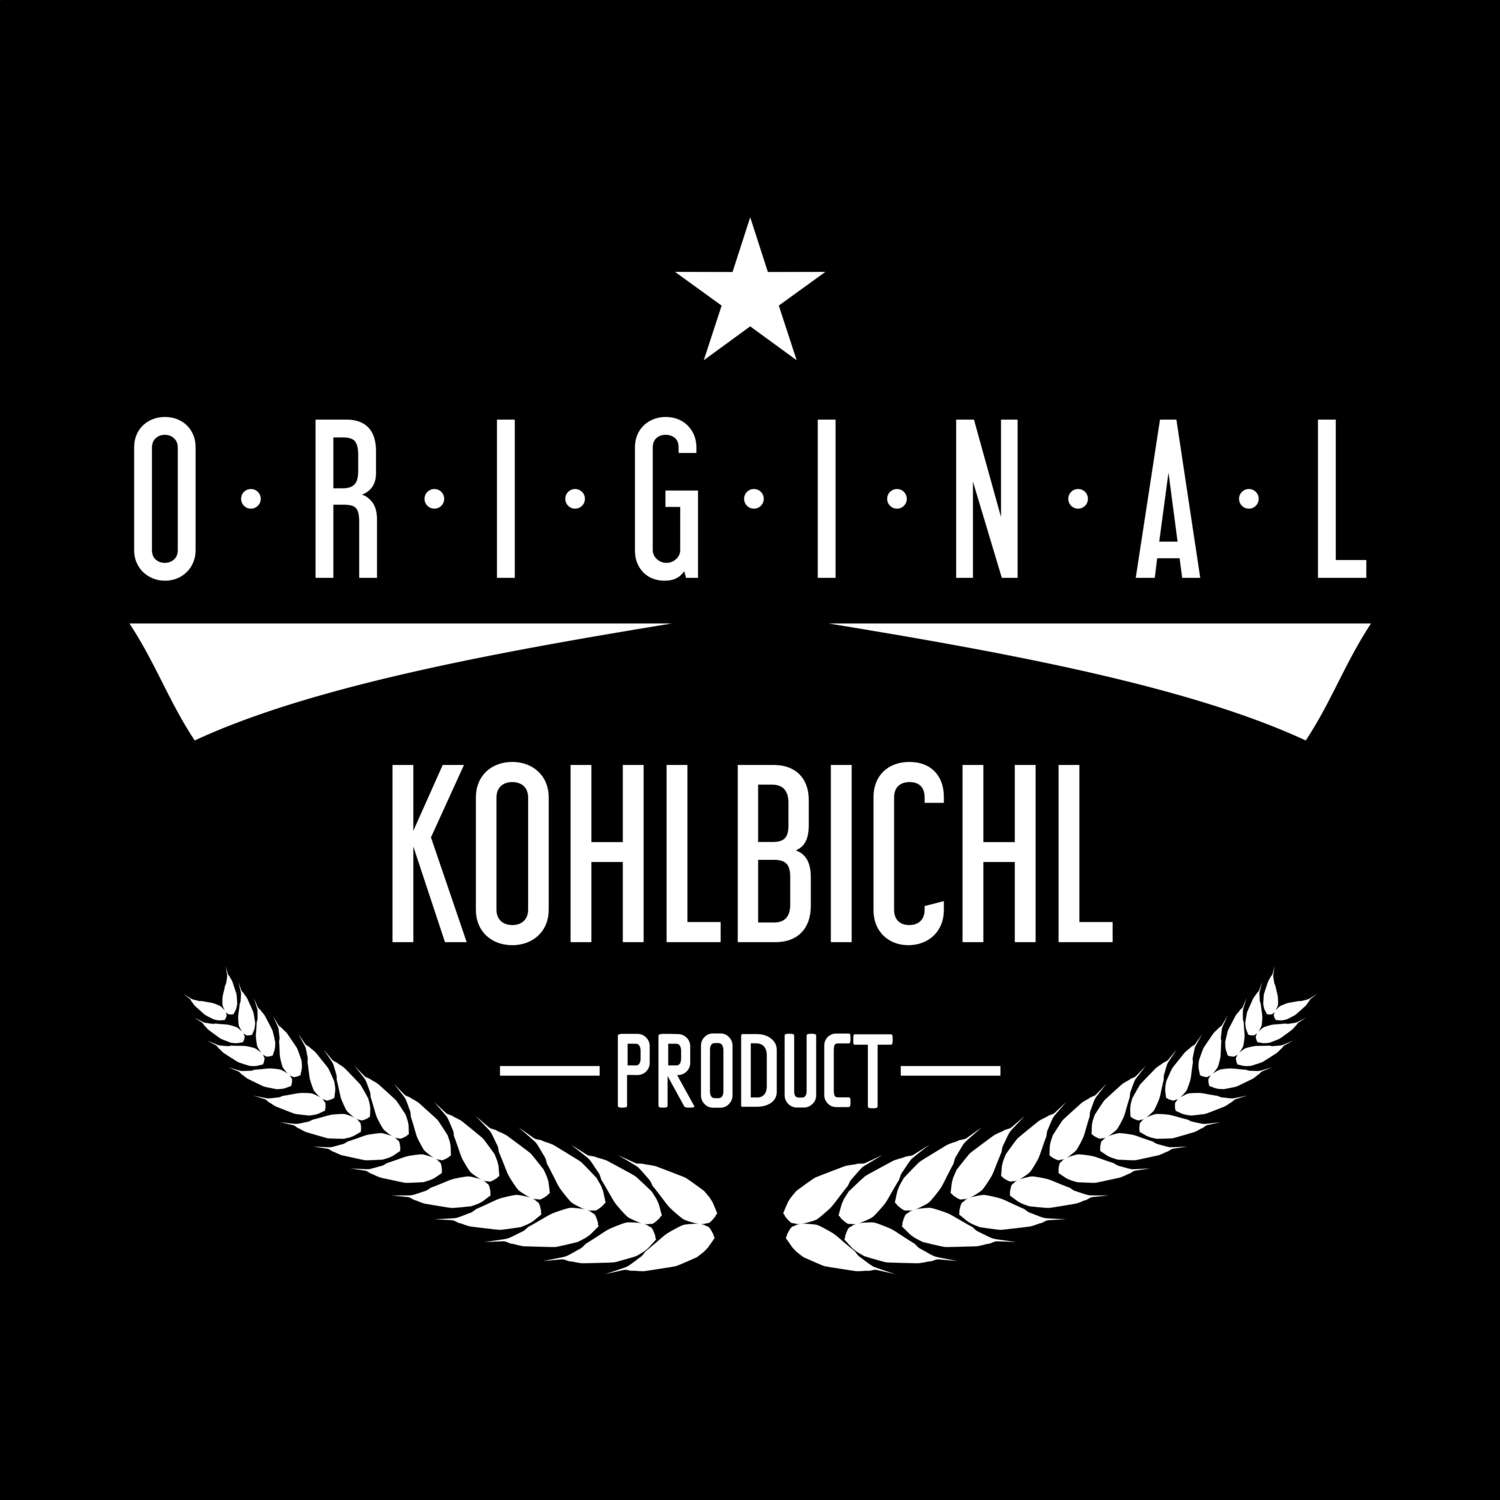 Kohlbichl T-Shirt »Original Product«